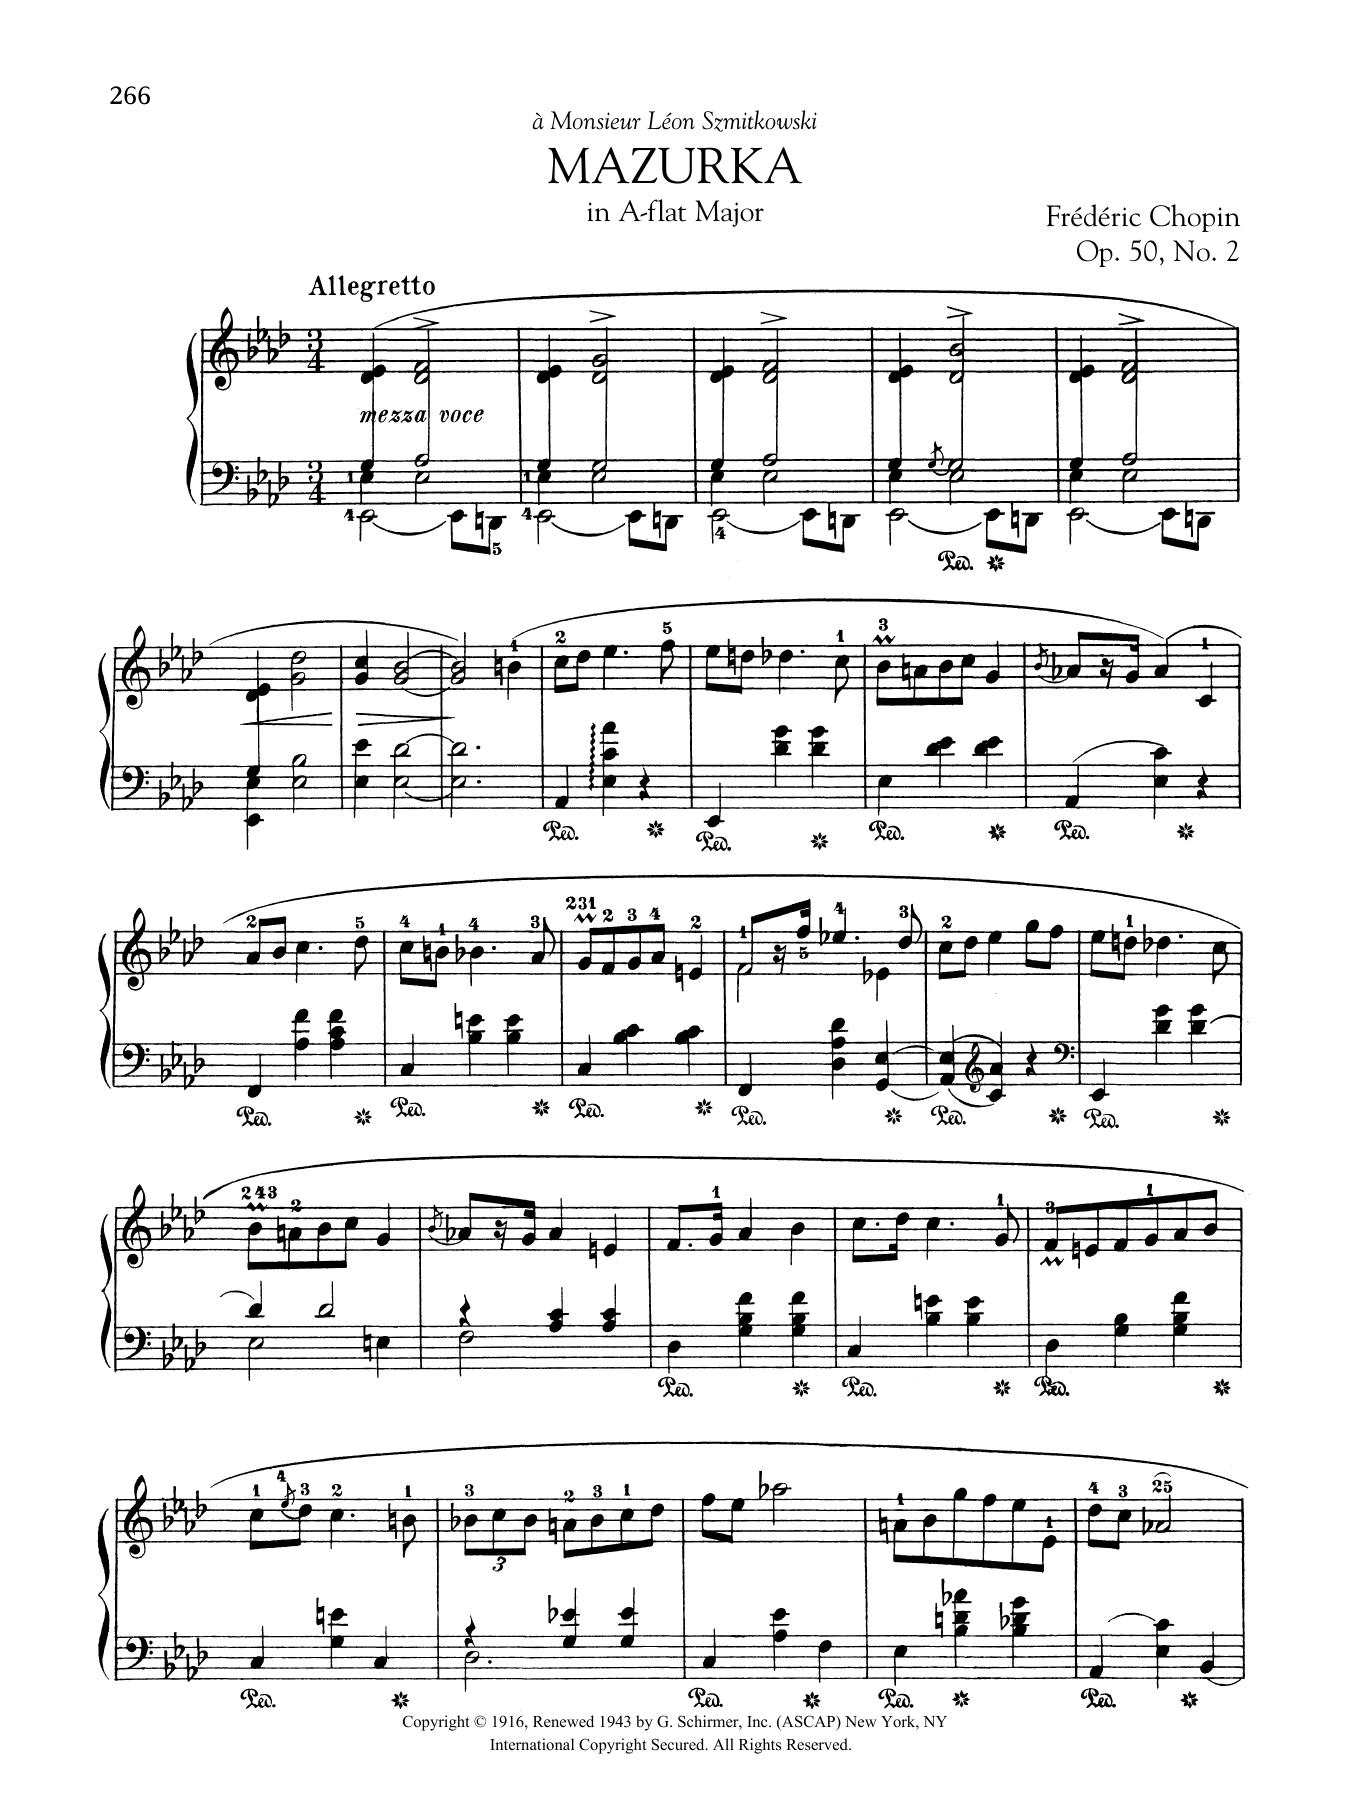 Download Frederic Chopin Mazurka in A-flat Major, Op. 50, No. 2 Sheet Music